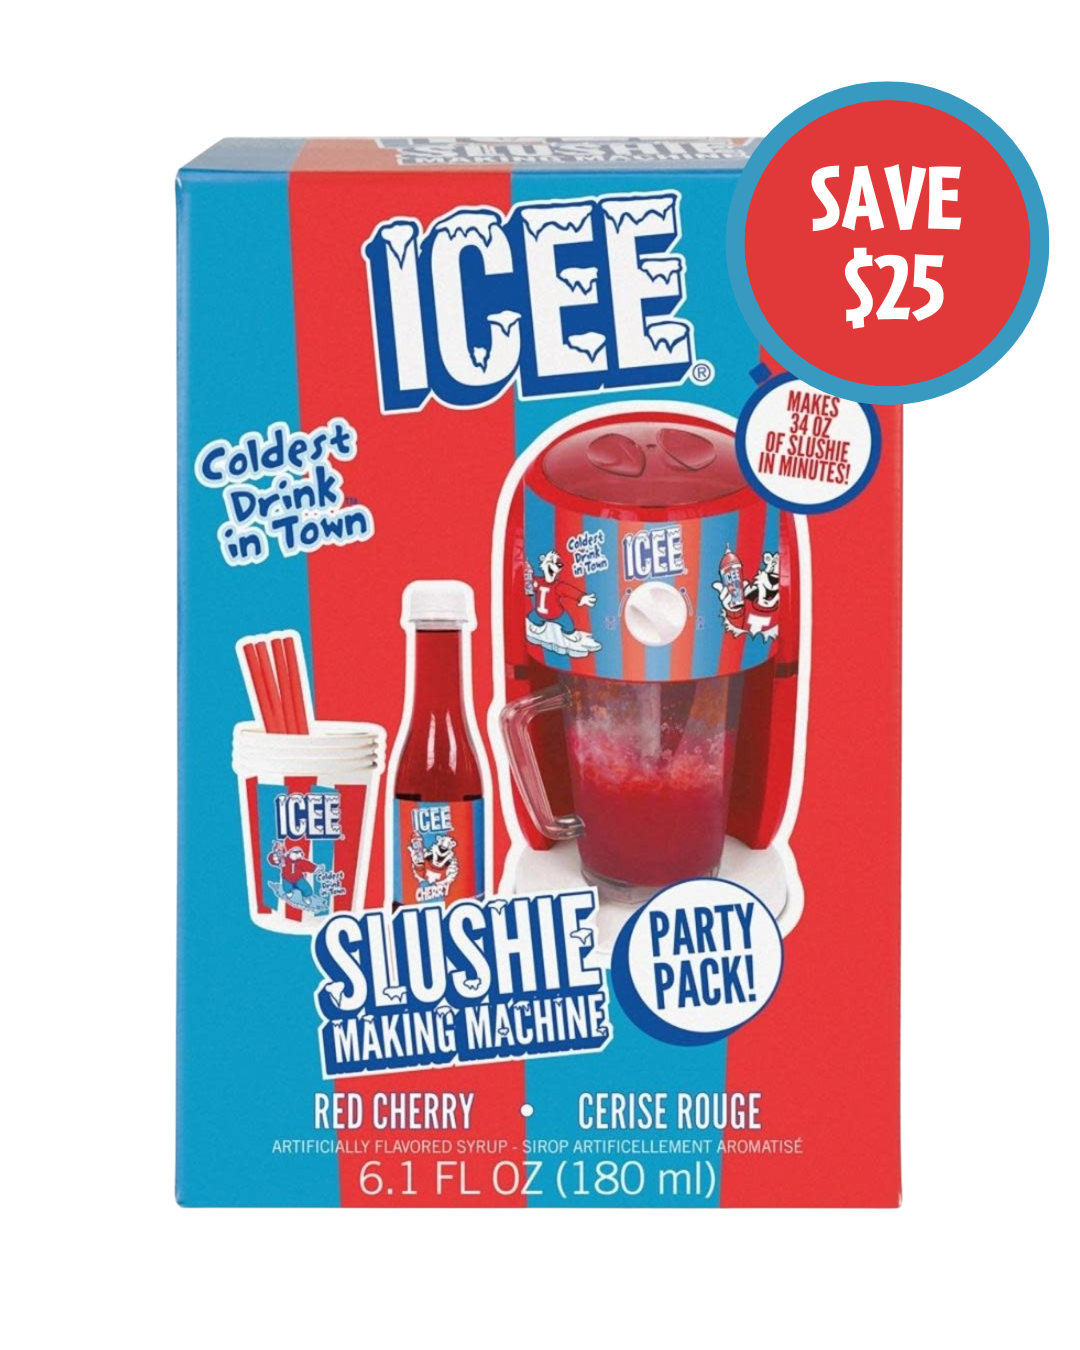 $25 off ICEE Slushie Machine!